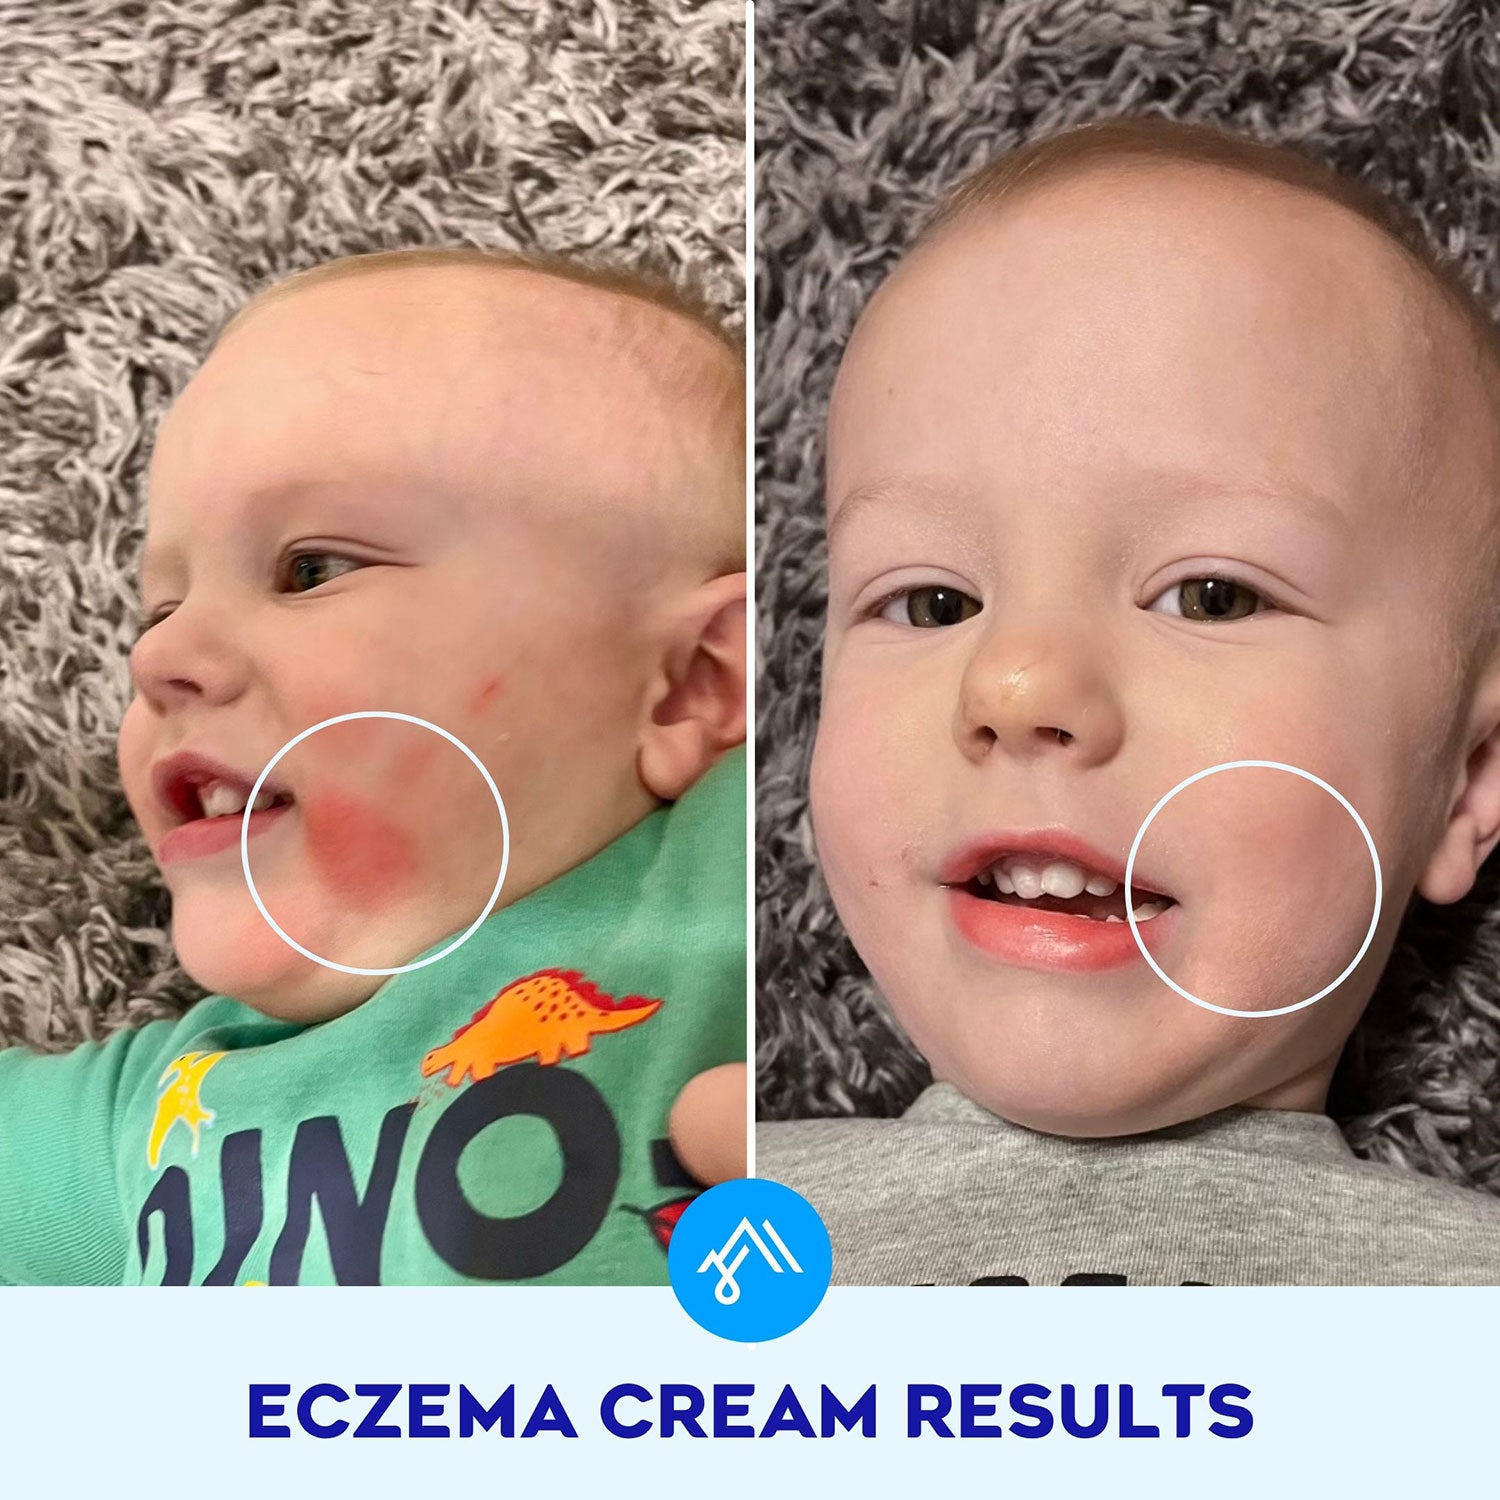 Eczema Cream with 1% Colloidal Oatmeal enhanced with Hydrosurf